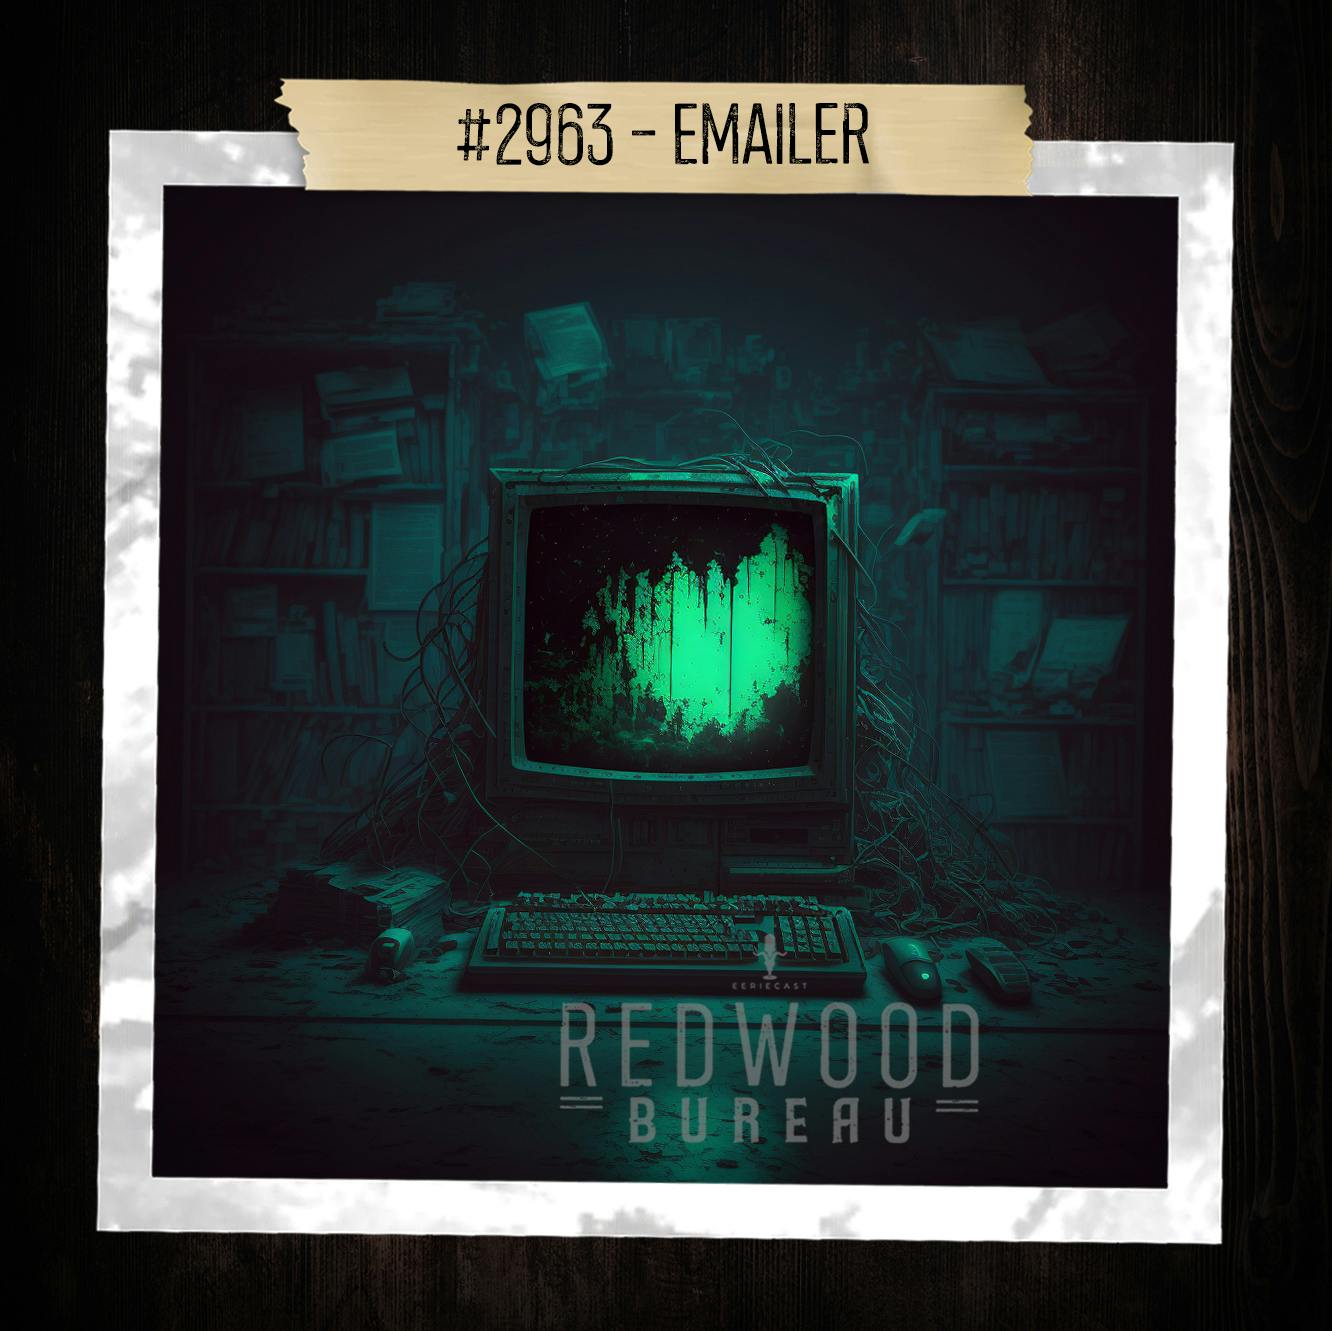 "EMAILER" - Redwood Bureau Phenomenon #2963